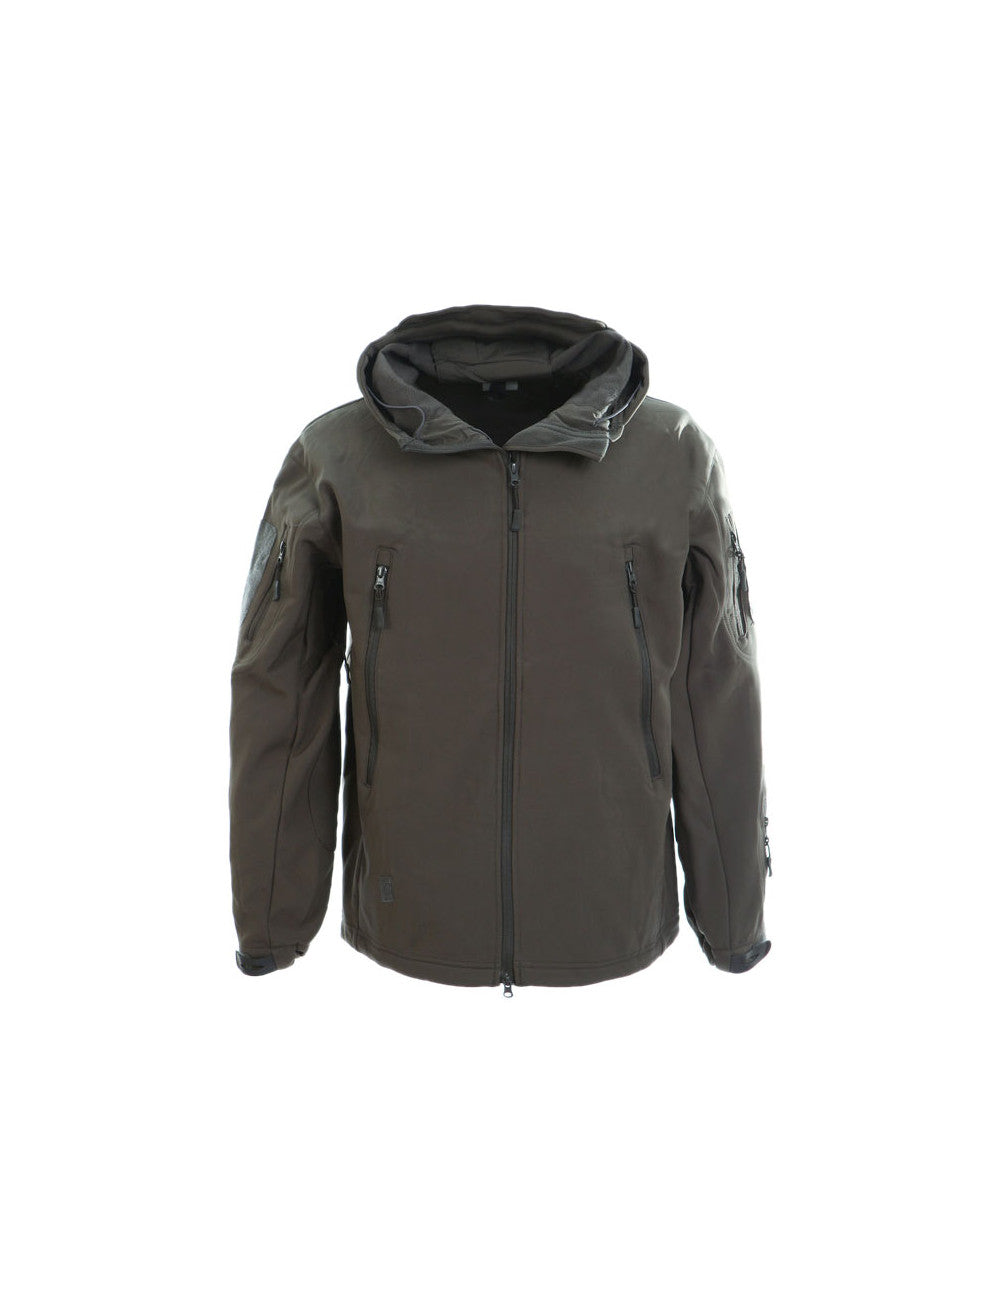 Dragonpro DP-SS001-016 3-Layer Softshell Jacket Grey